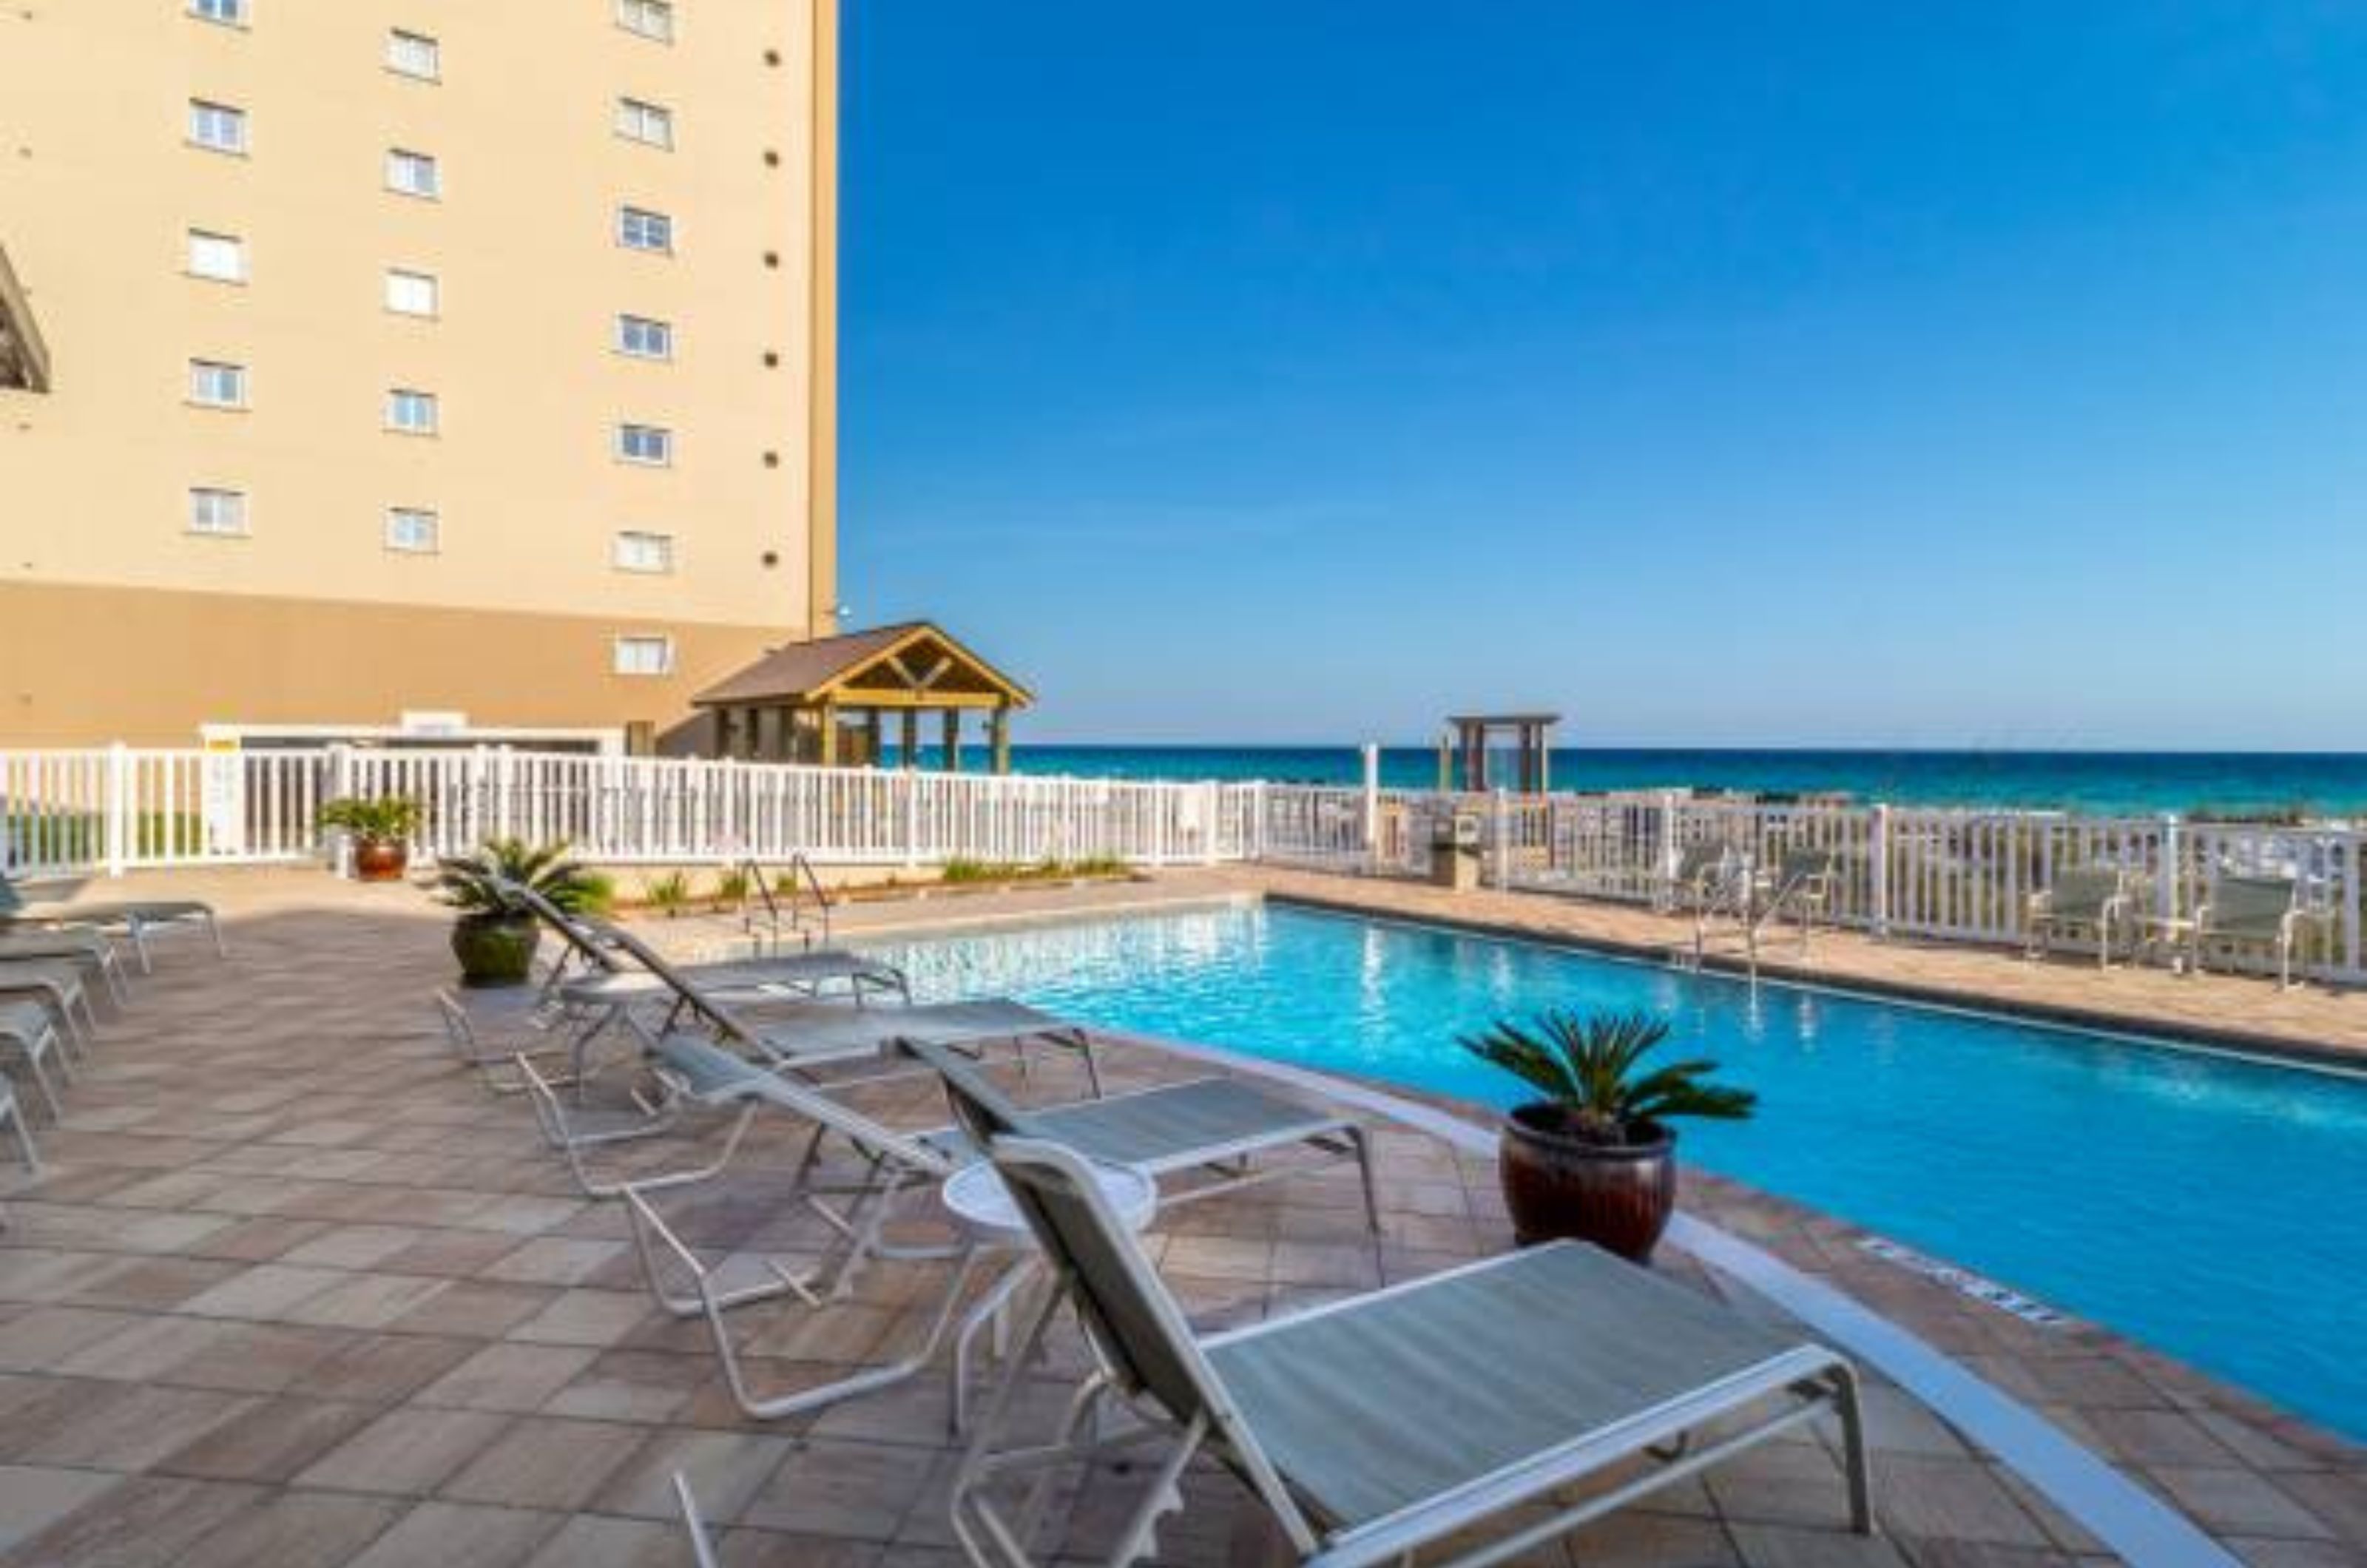 Destin Gulfgate Condominiums - https://www.beachguide.com/destin-vacation-rentals-destin-gulfgate-condominiums-9649507.jpg?width=185&height=185